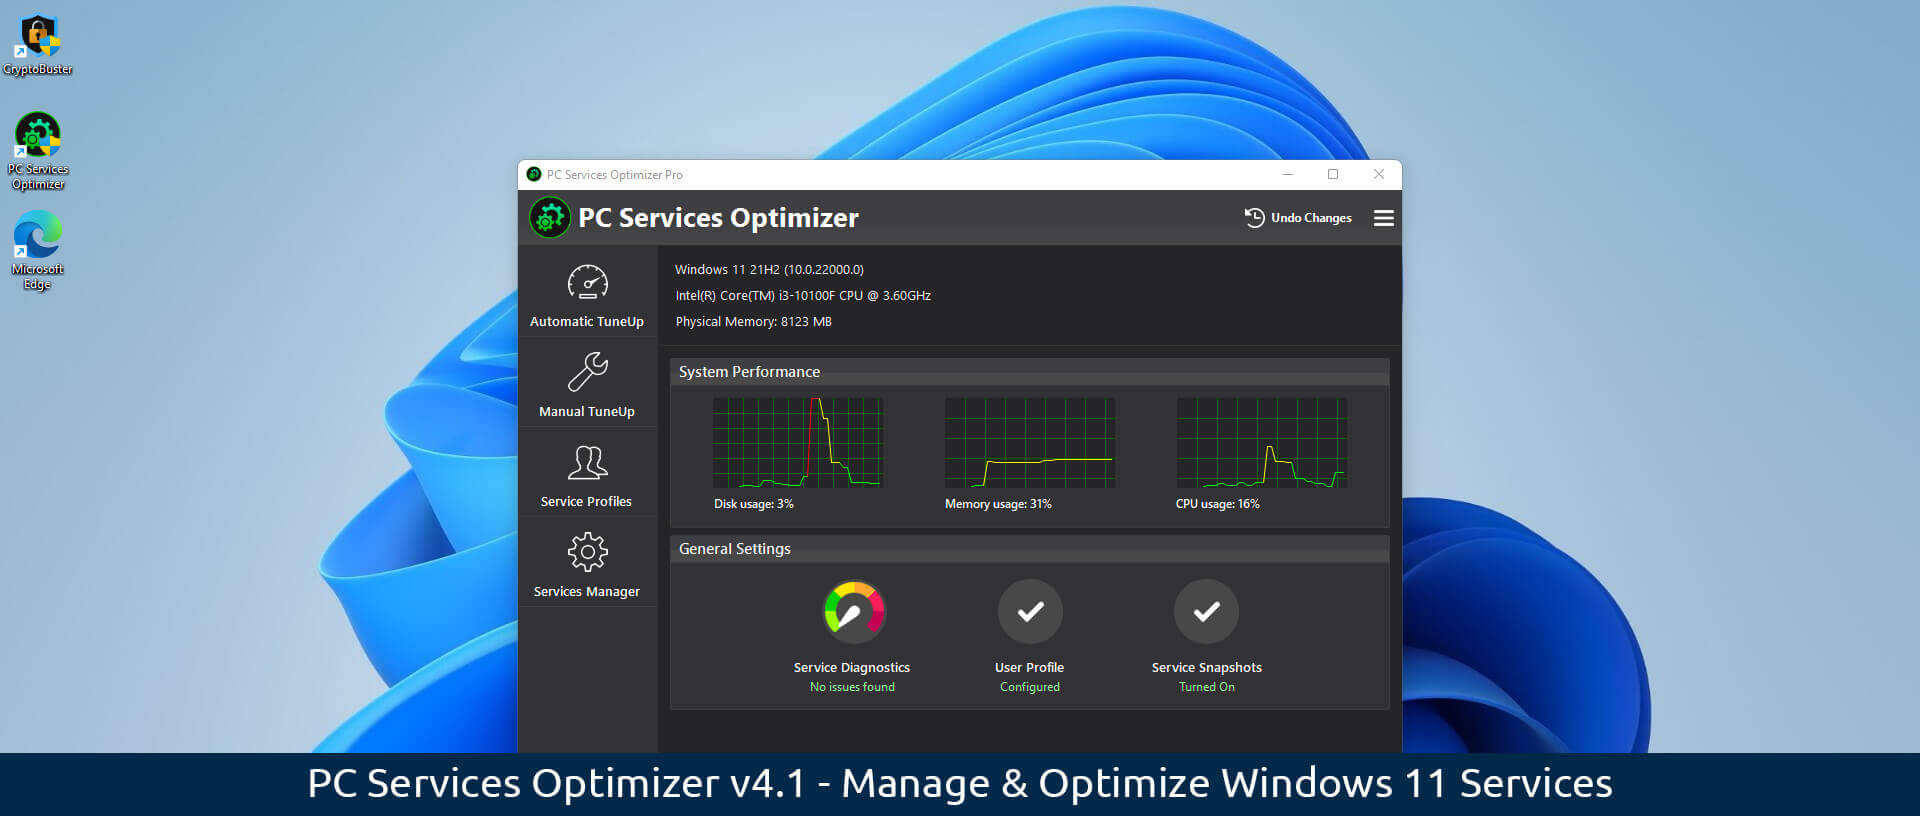 Windows 11: The Optimization and Performance Improvements